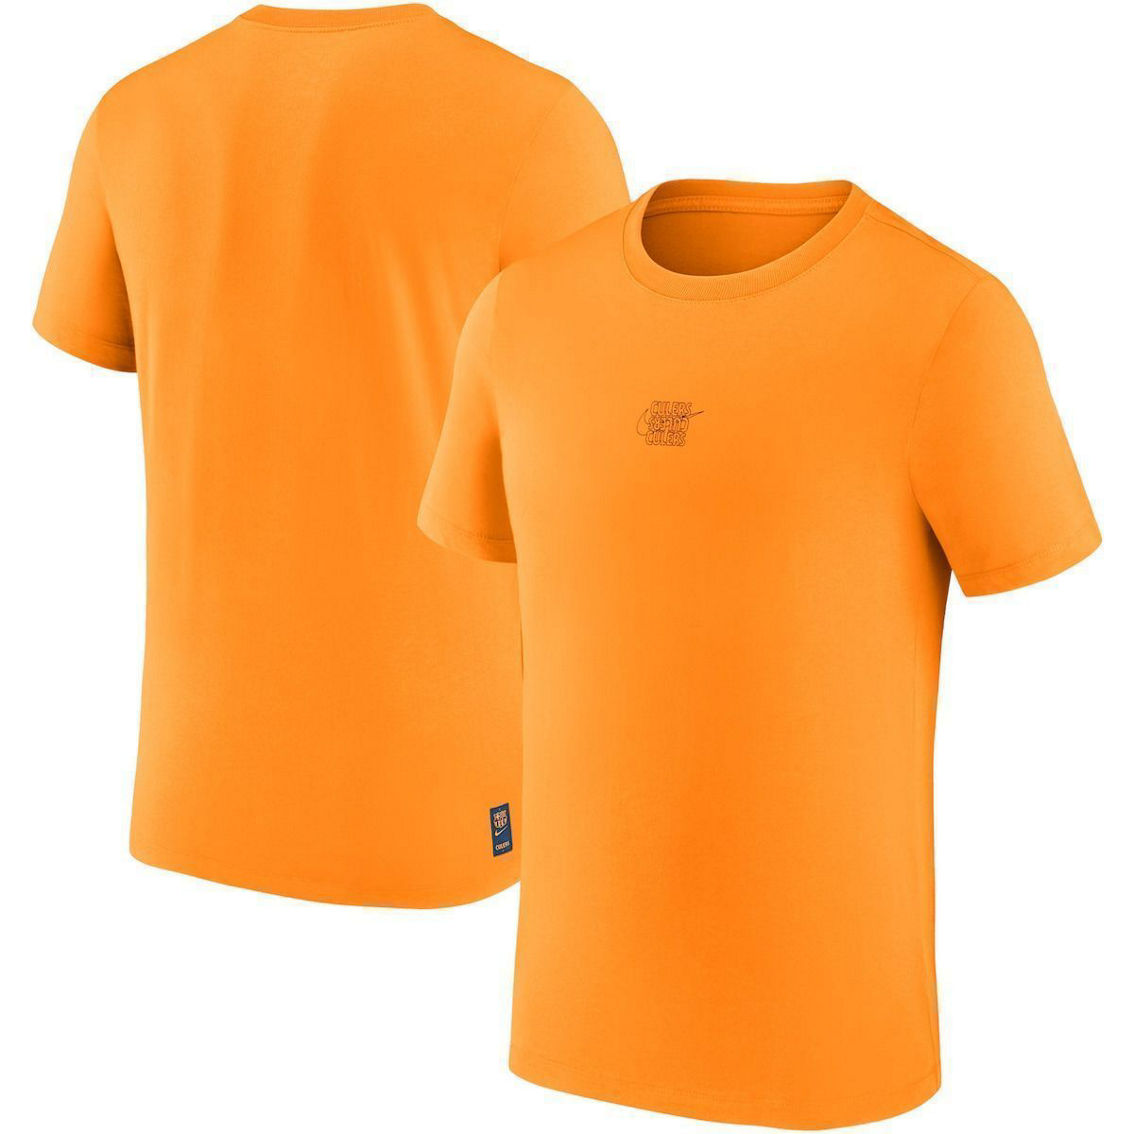 Nike Men's Orange Barcelona Club Swoosh T-Shirt - Image 2 of 4